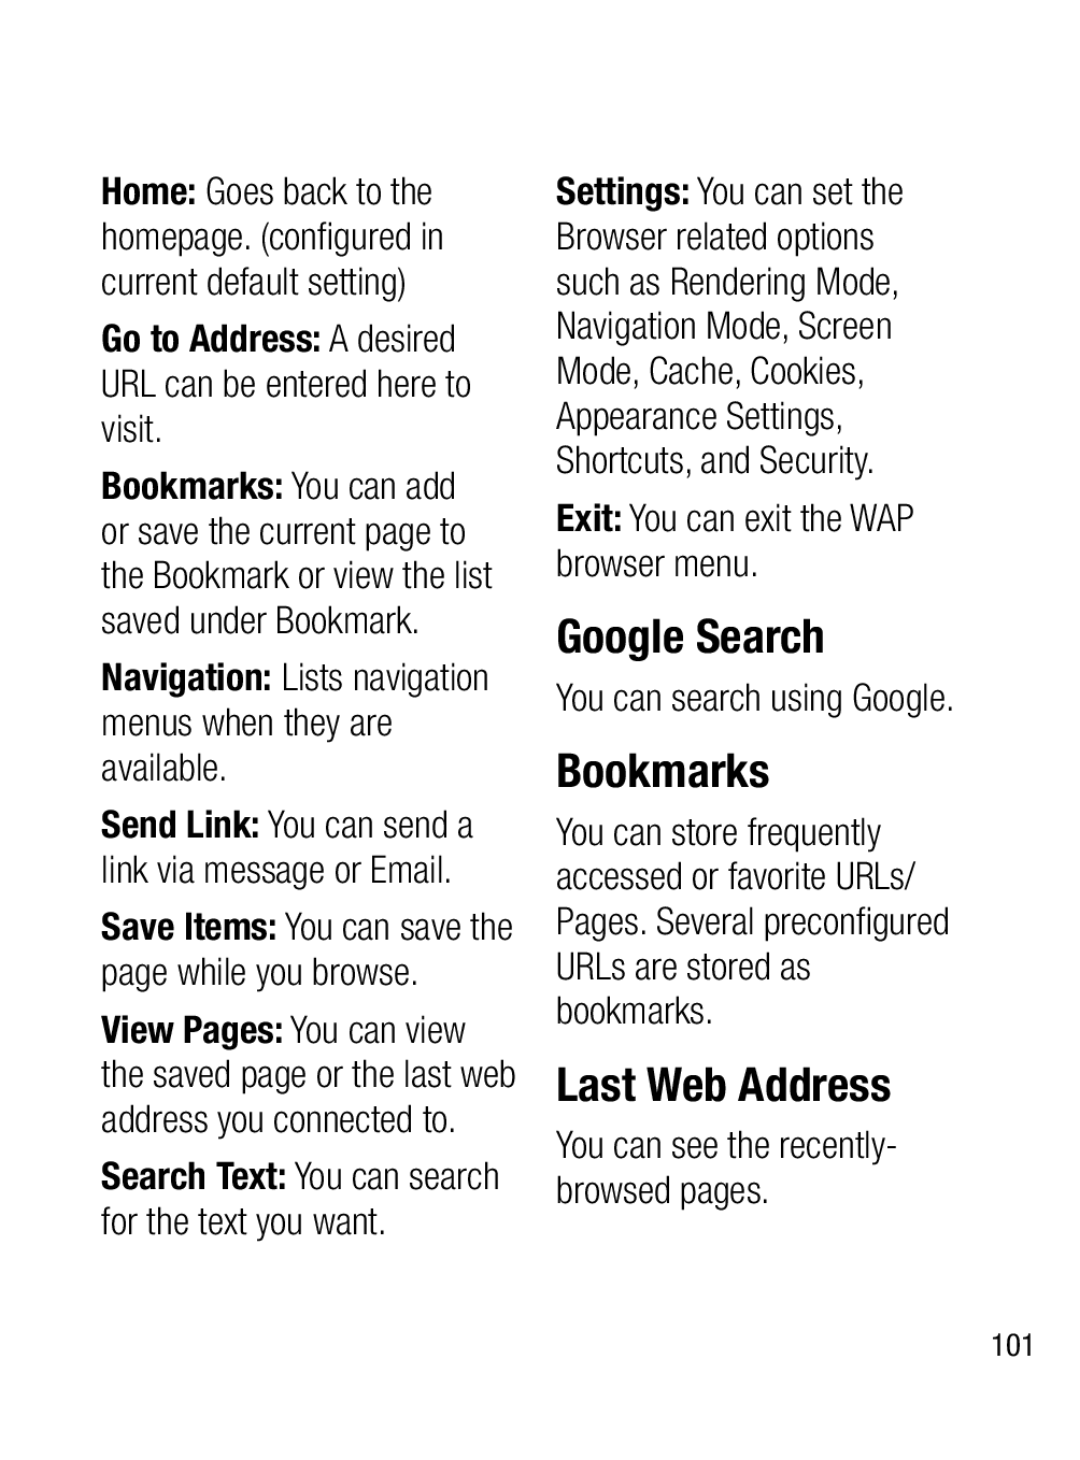 LG Electronics A133CH manual Google Search, Bookmarks, Last Web Address 